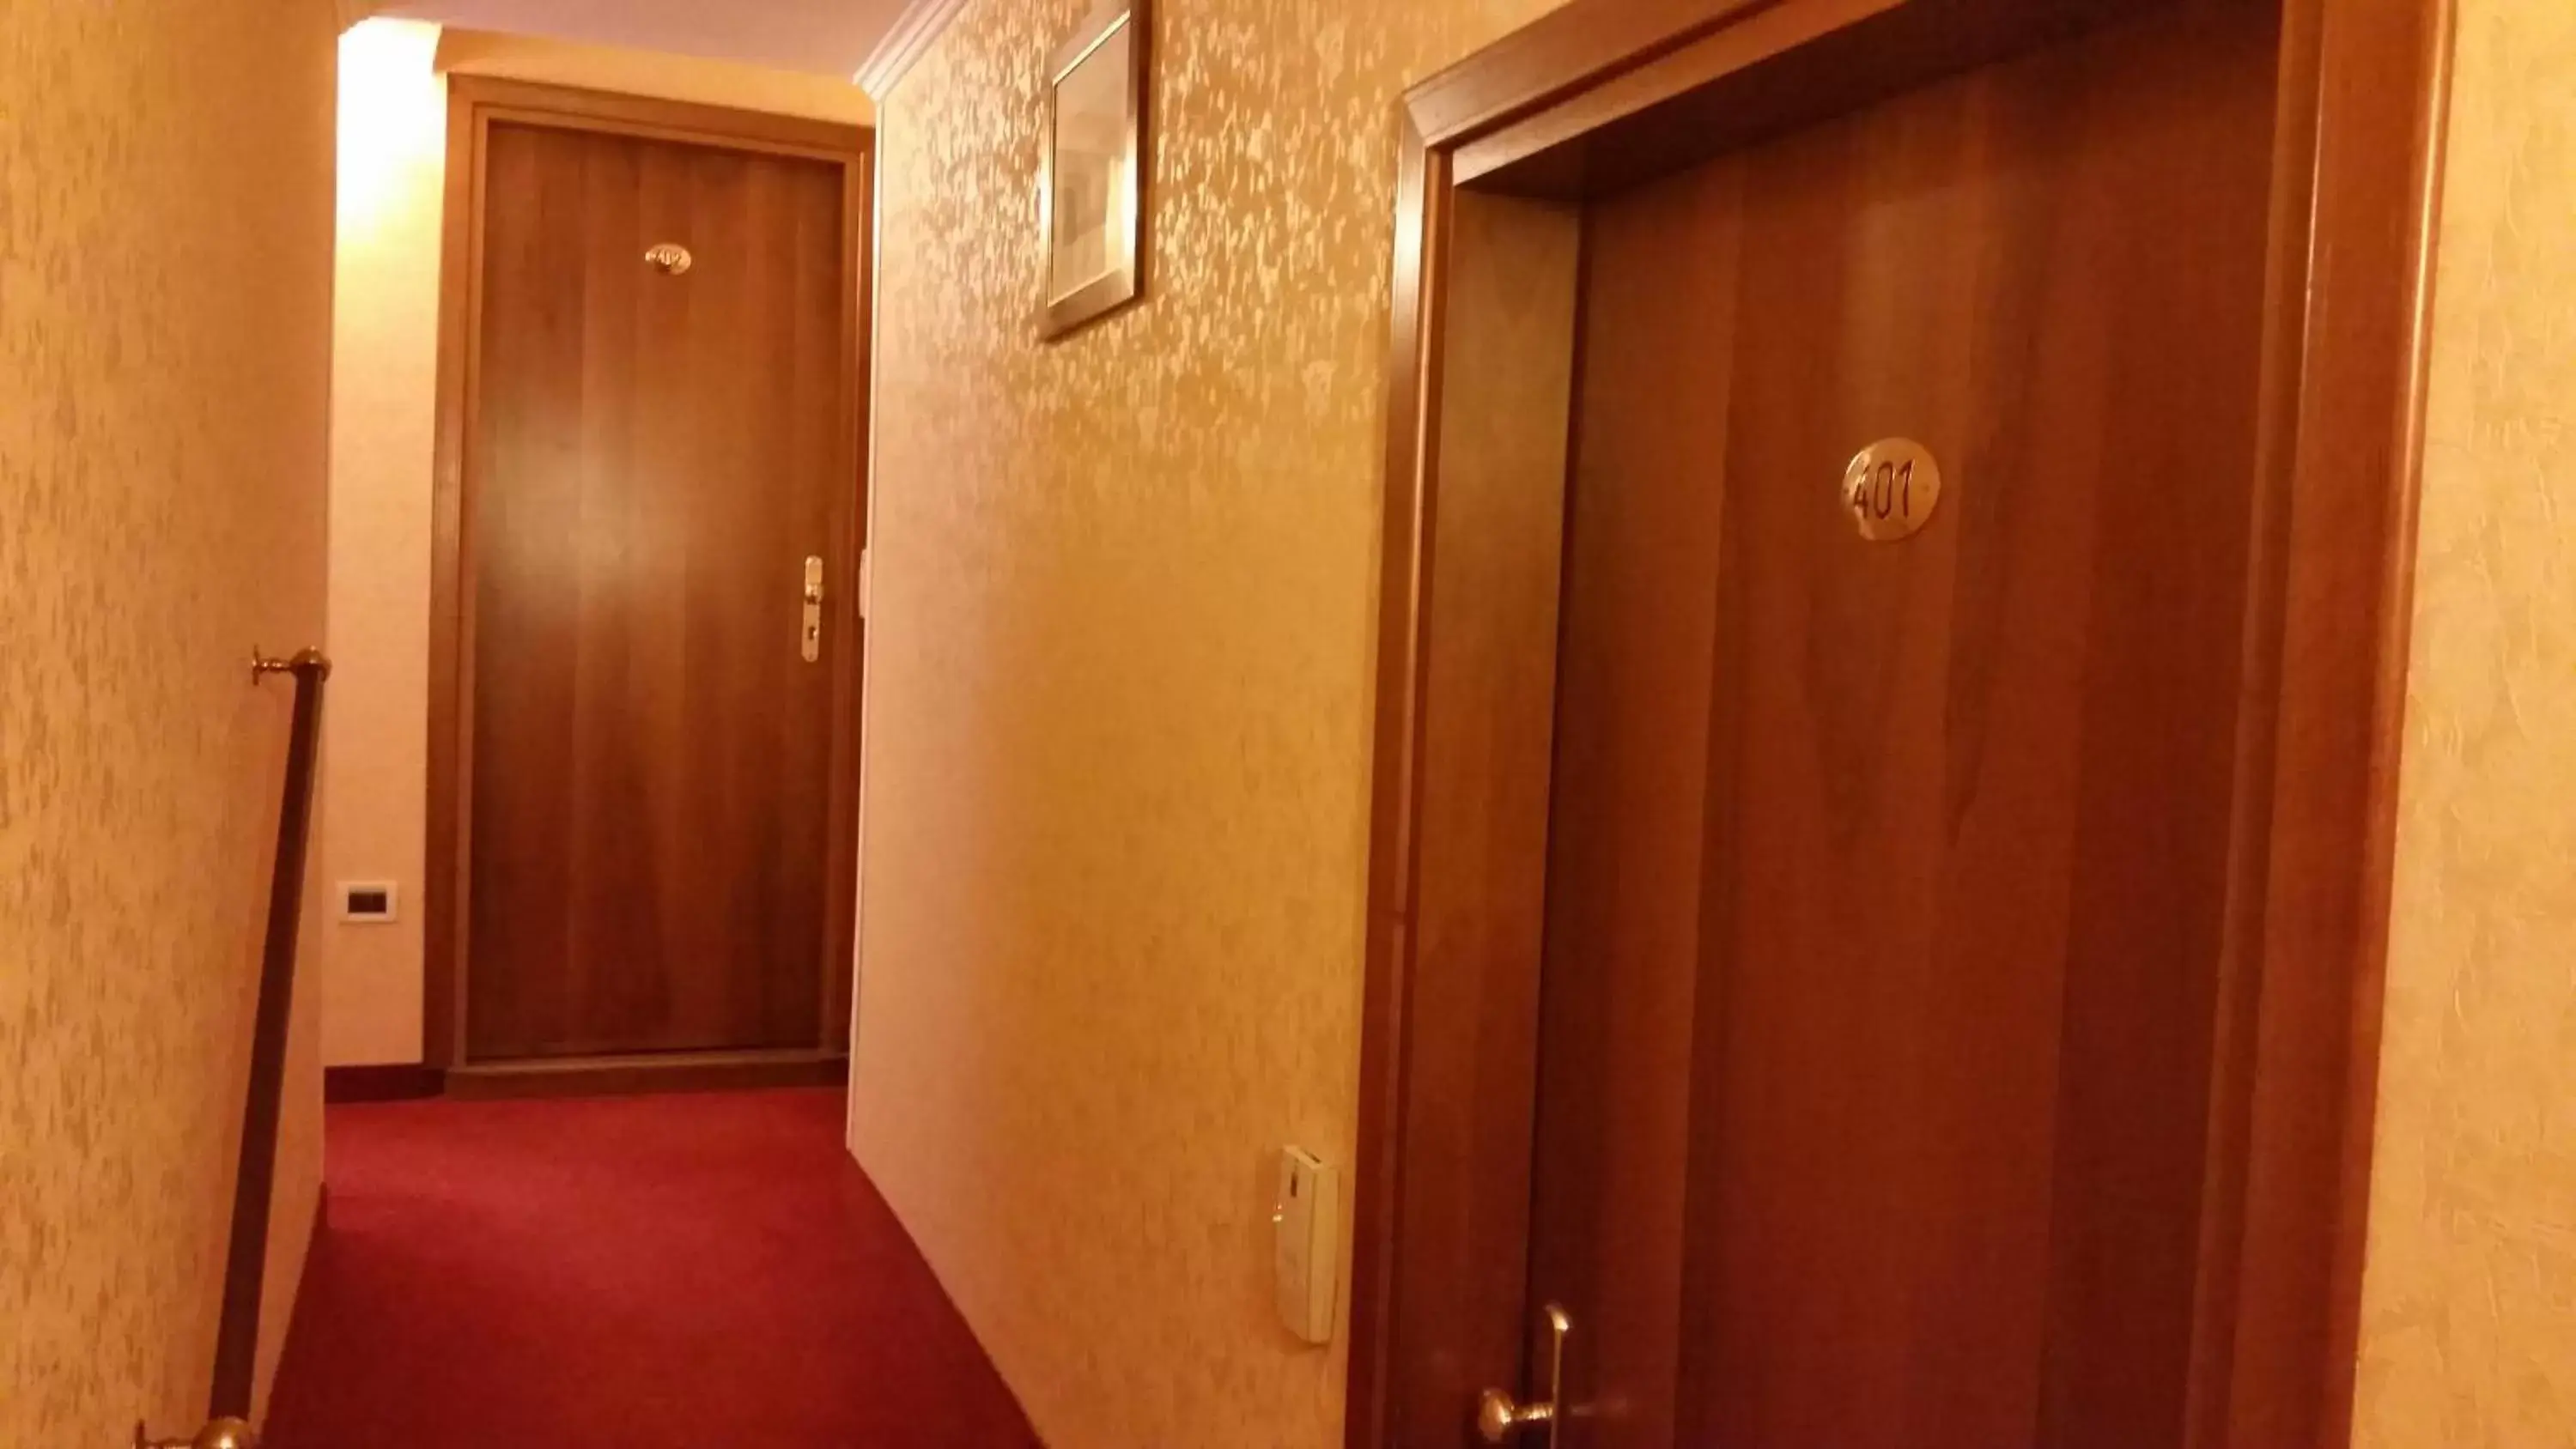 Area and facilities, Bathroom in Hotel Tintoretto